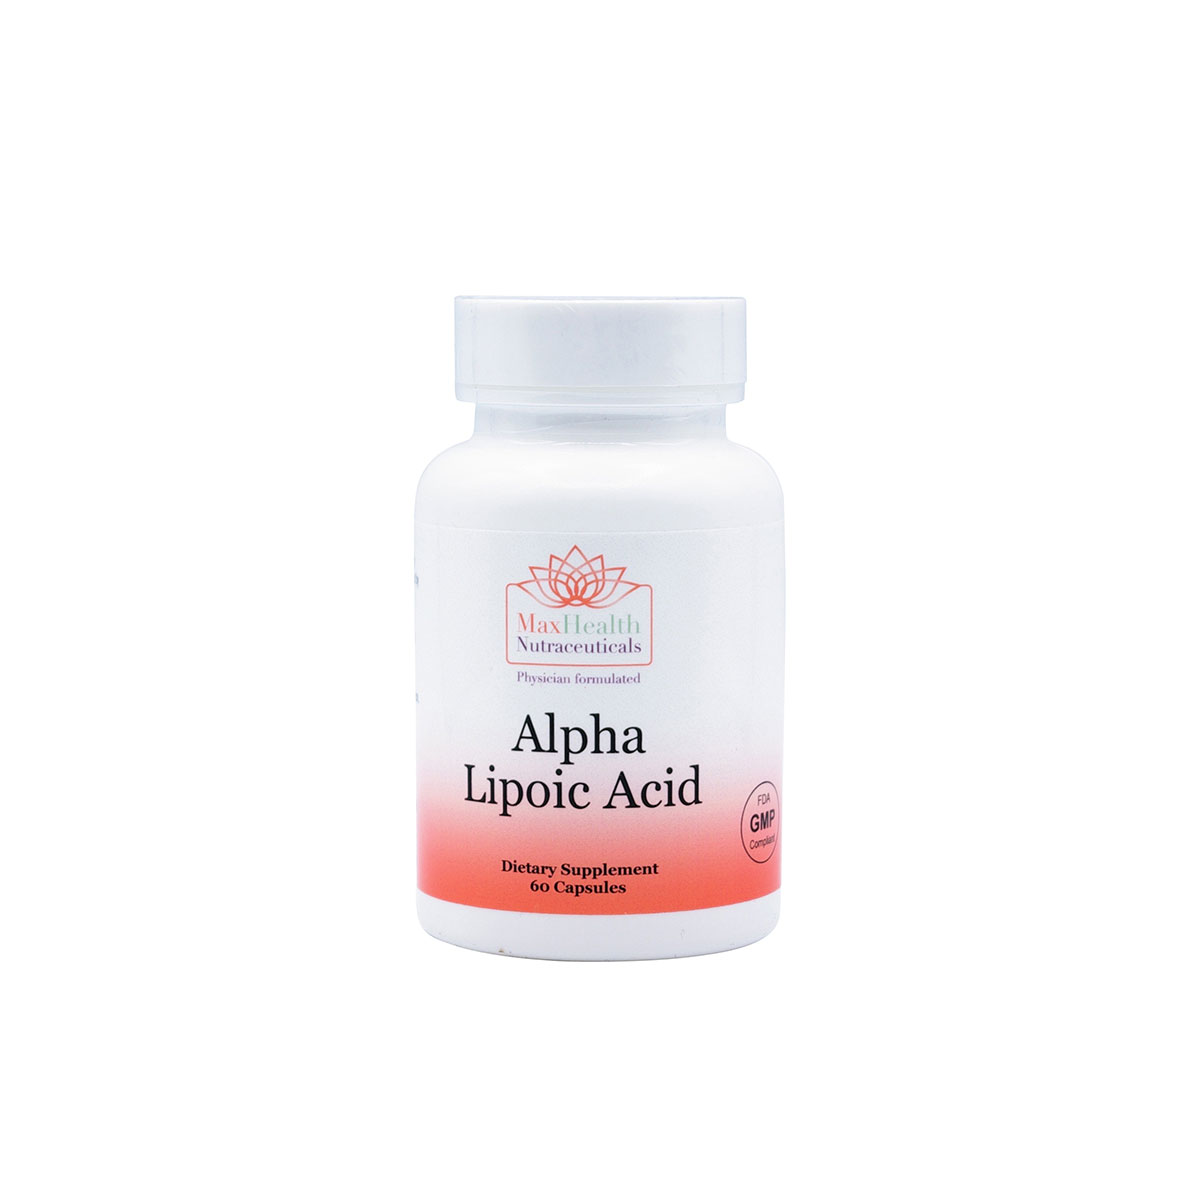 11Alpha Lipoic Acid